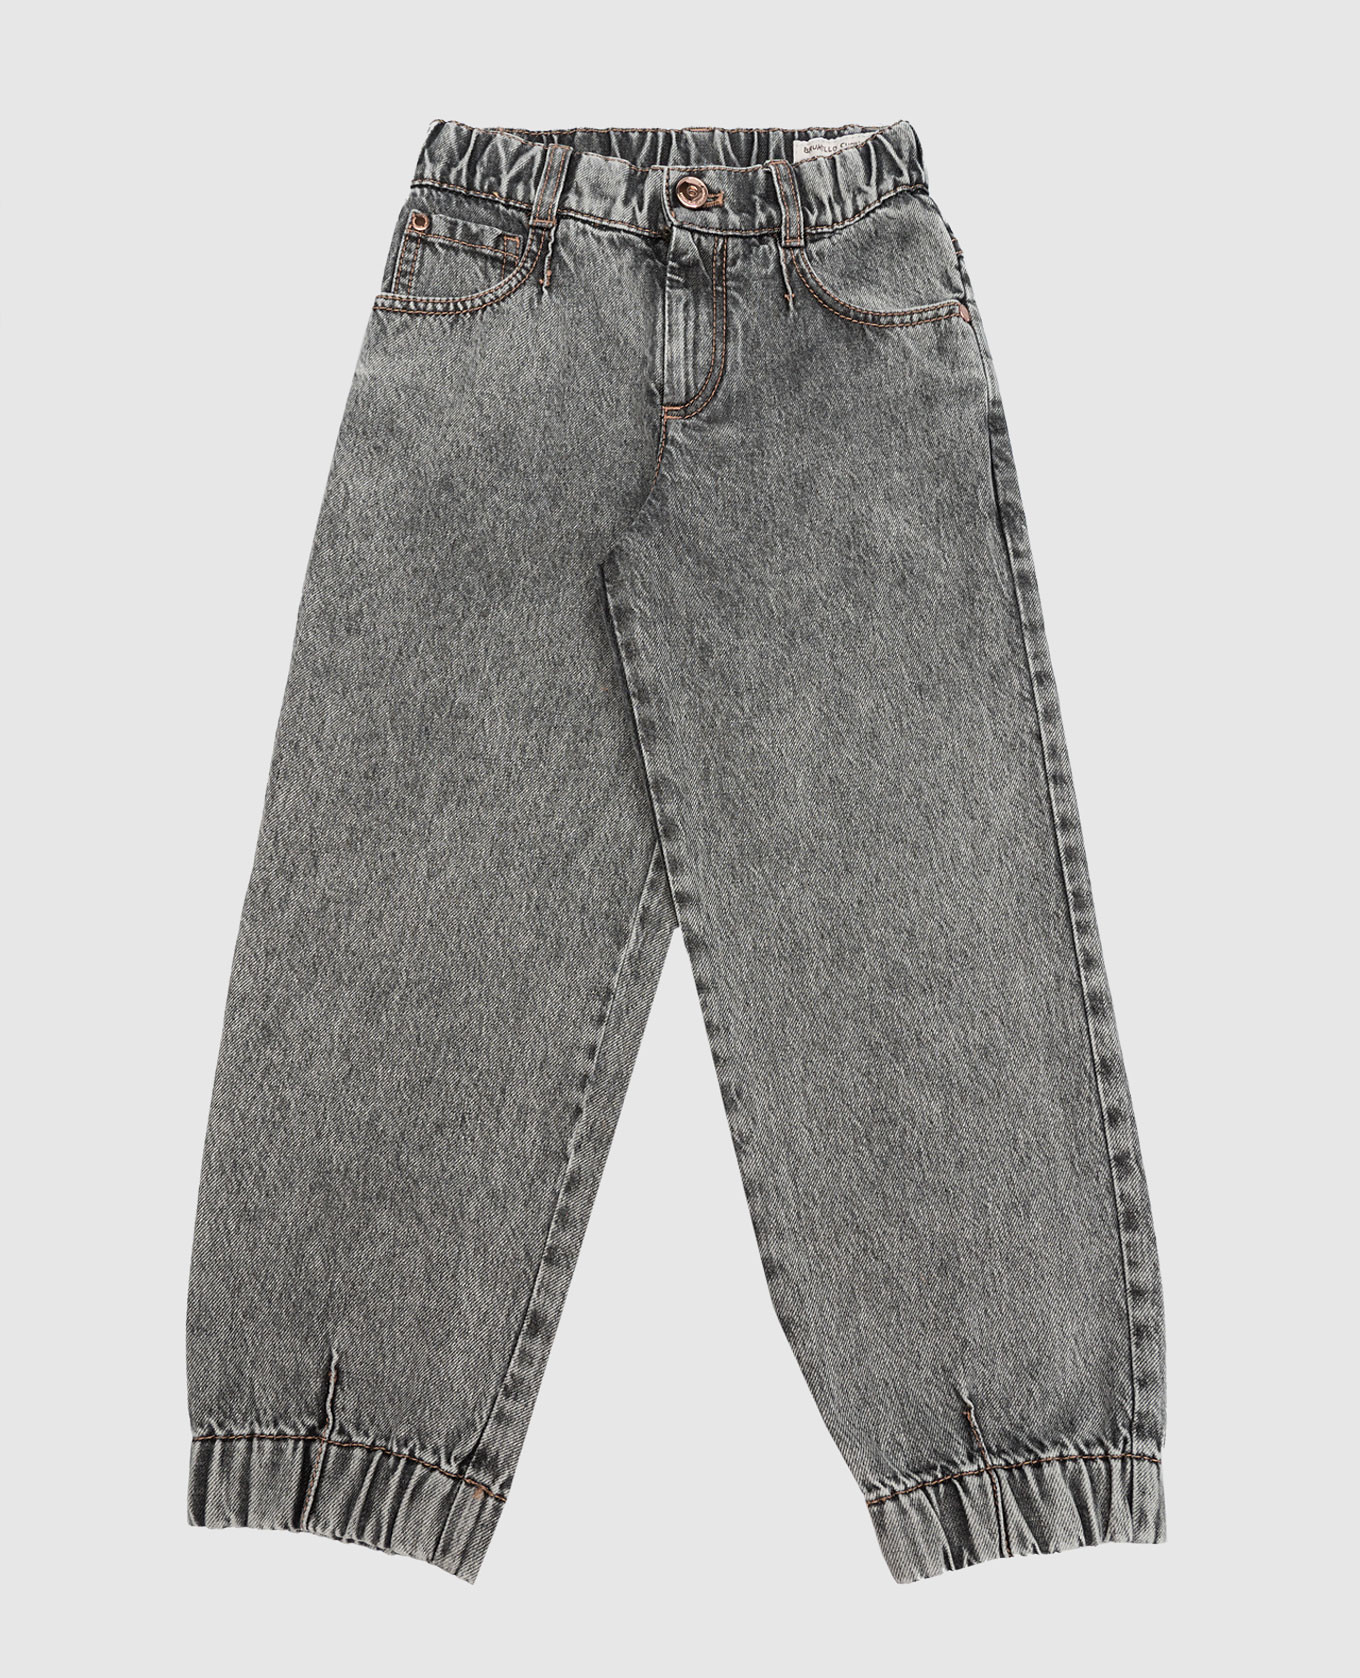 Children's gray jeans with monil chain